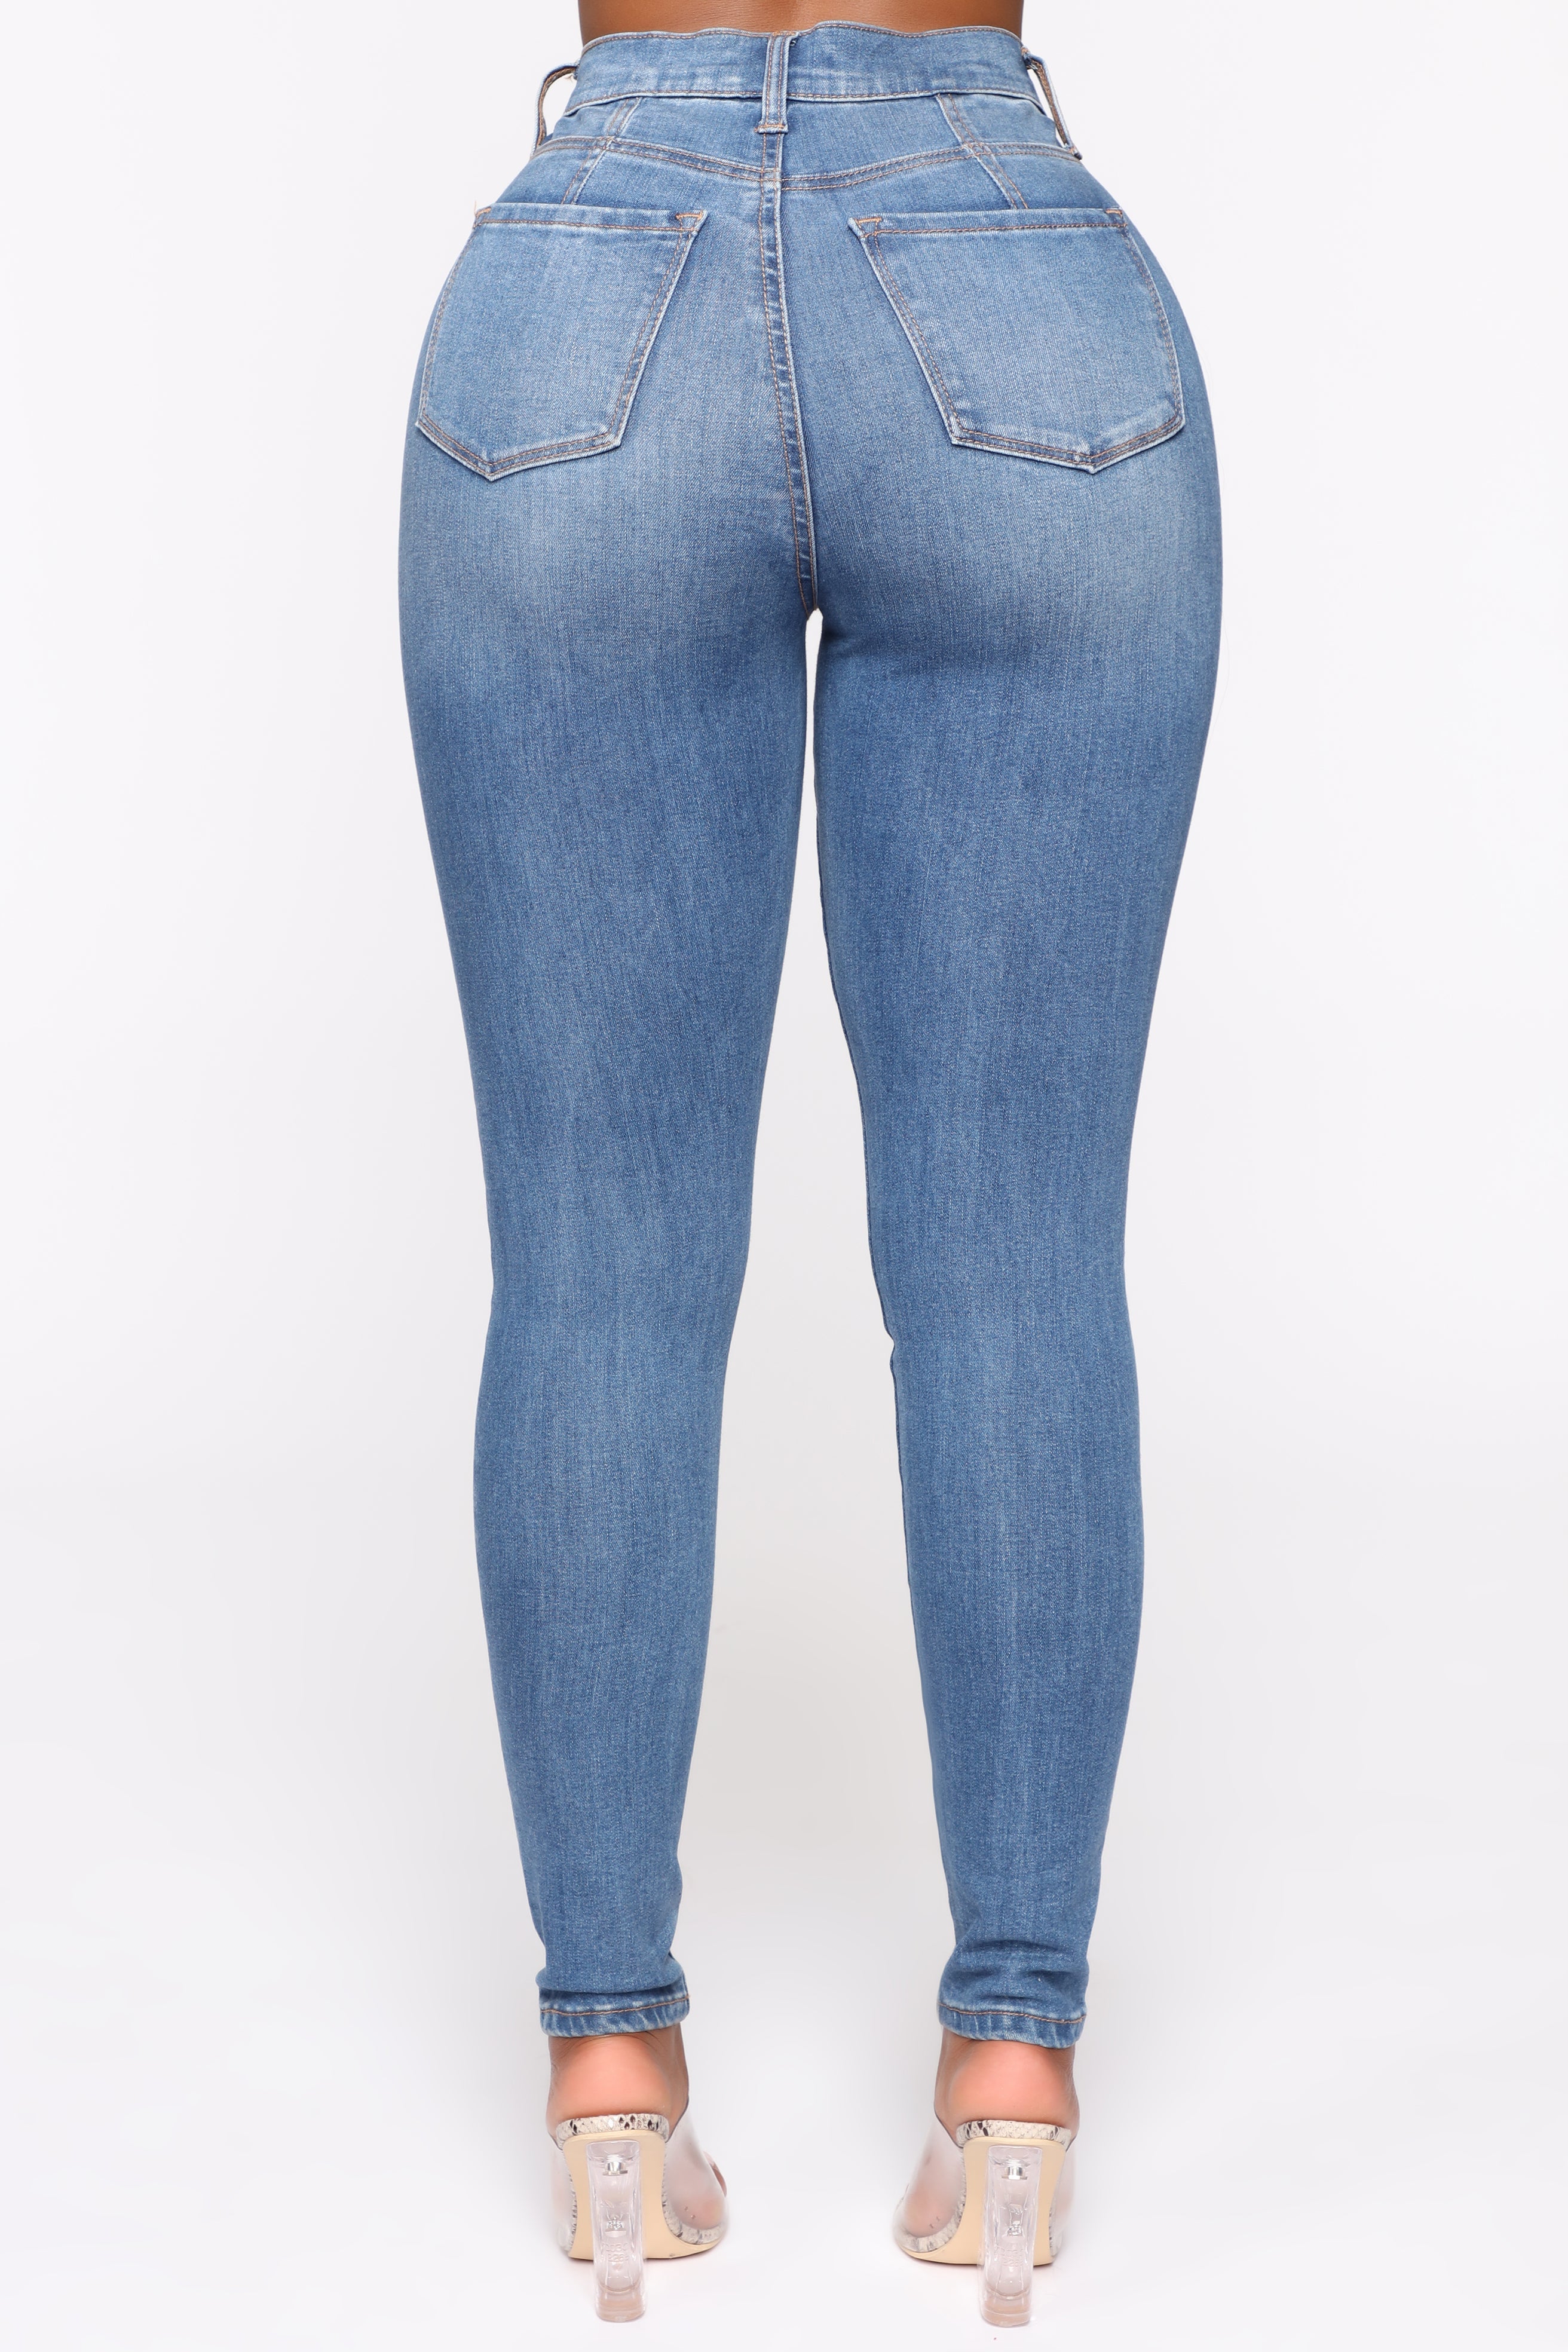 Our Favorite High Rise Skinny Jeans - Medium Blue Wash – InsStreet